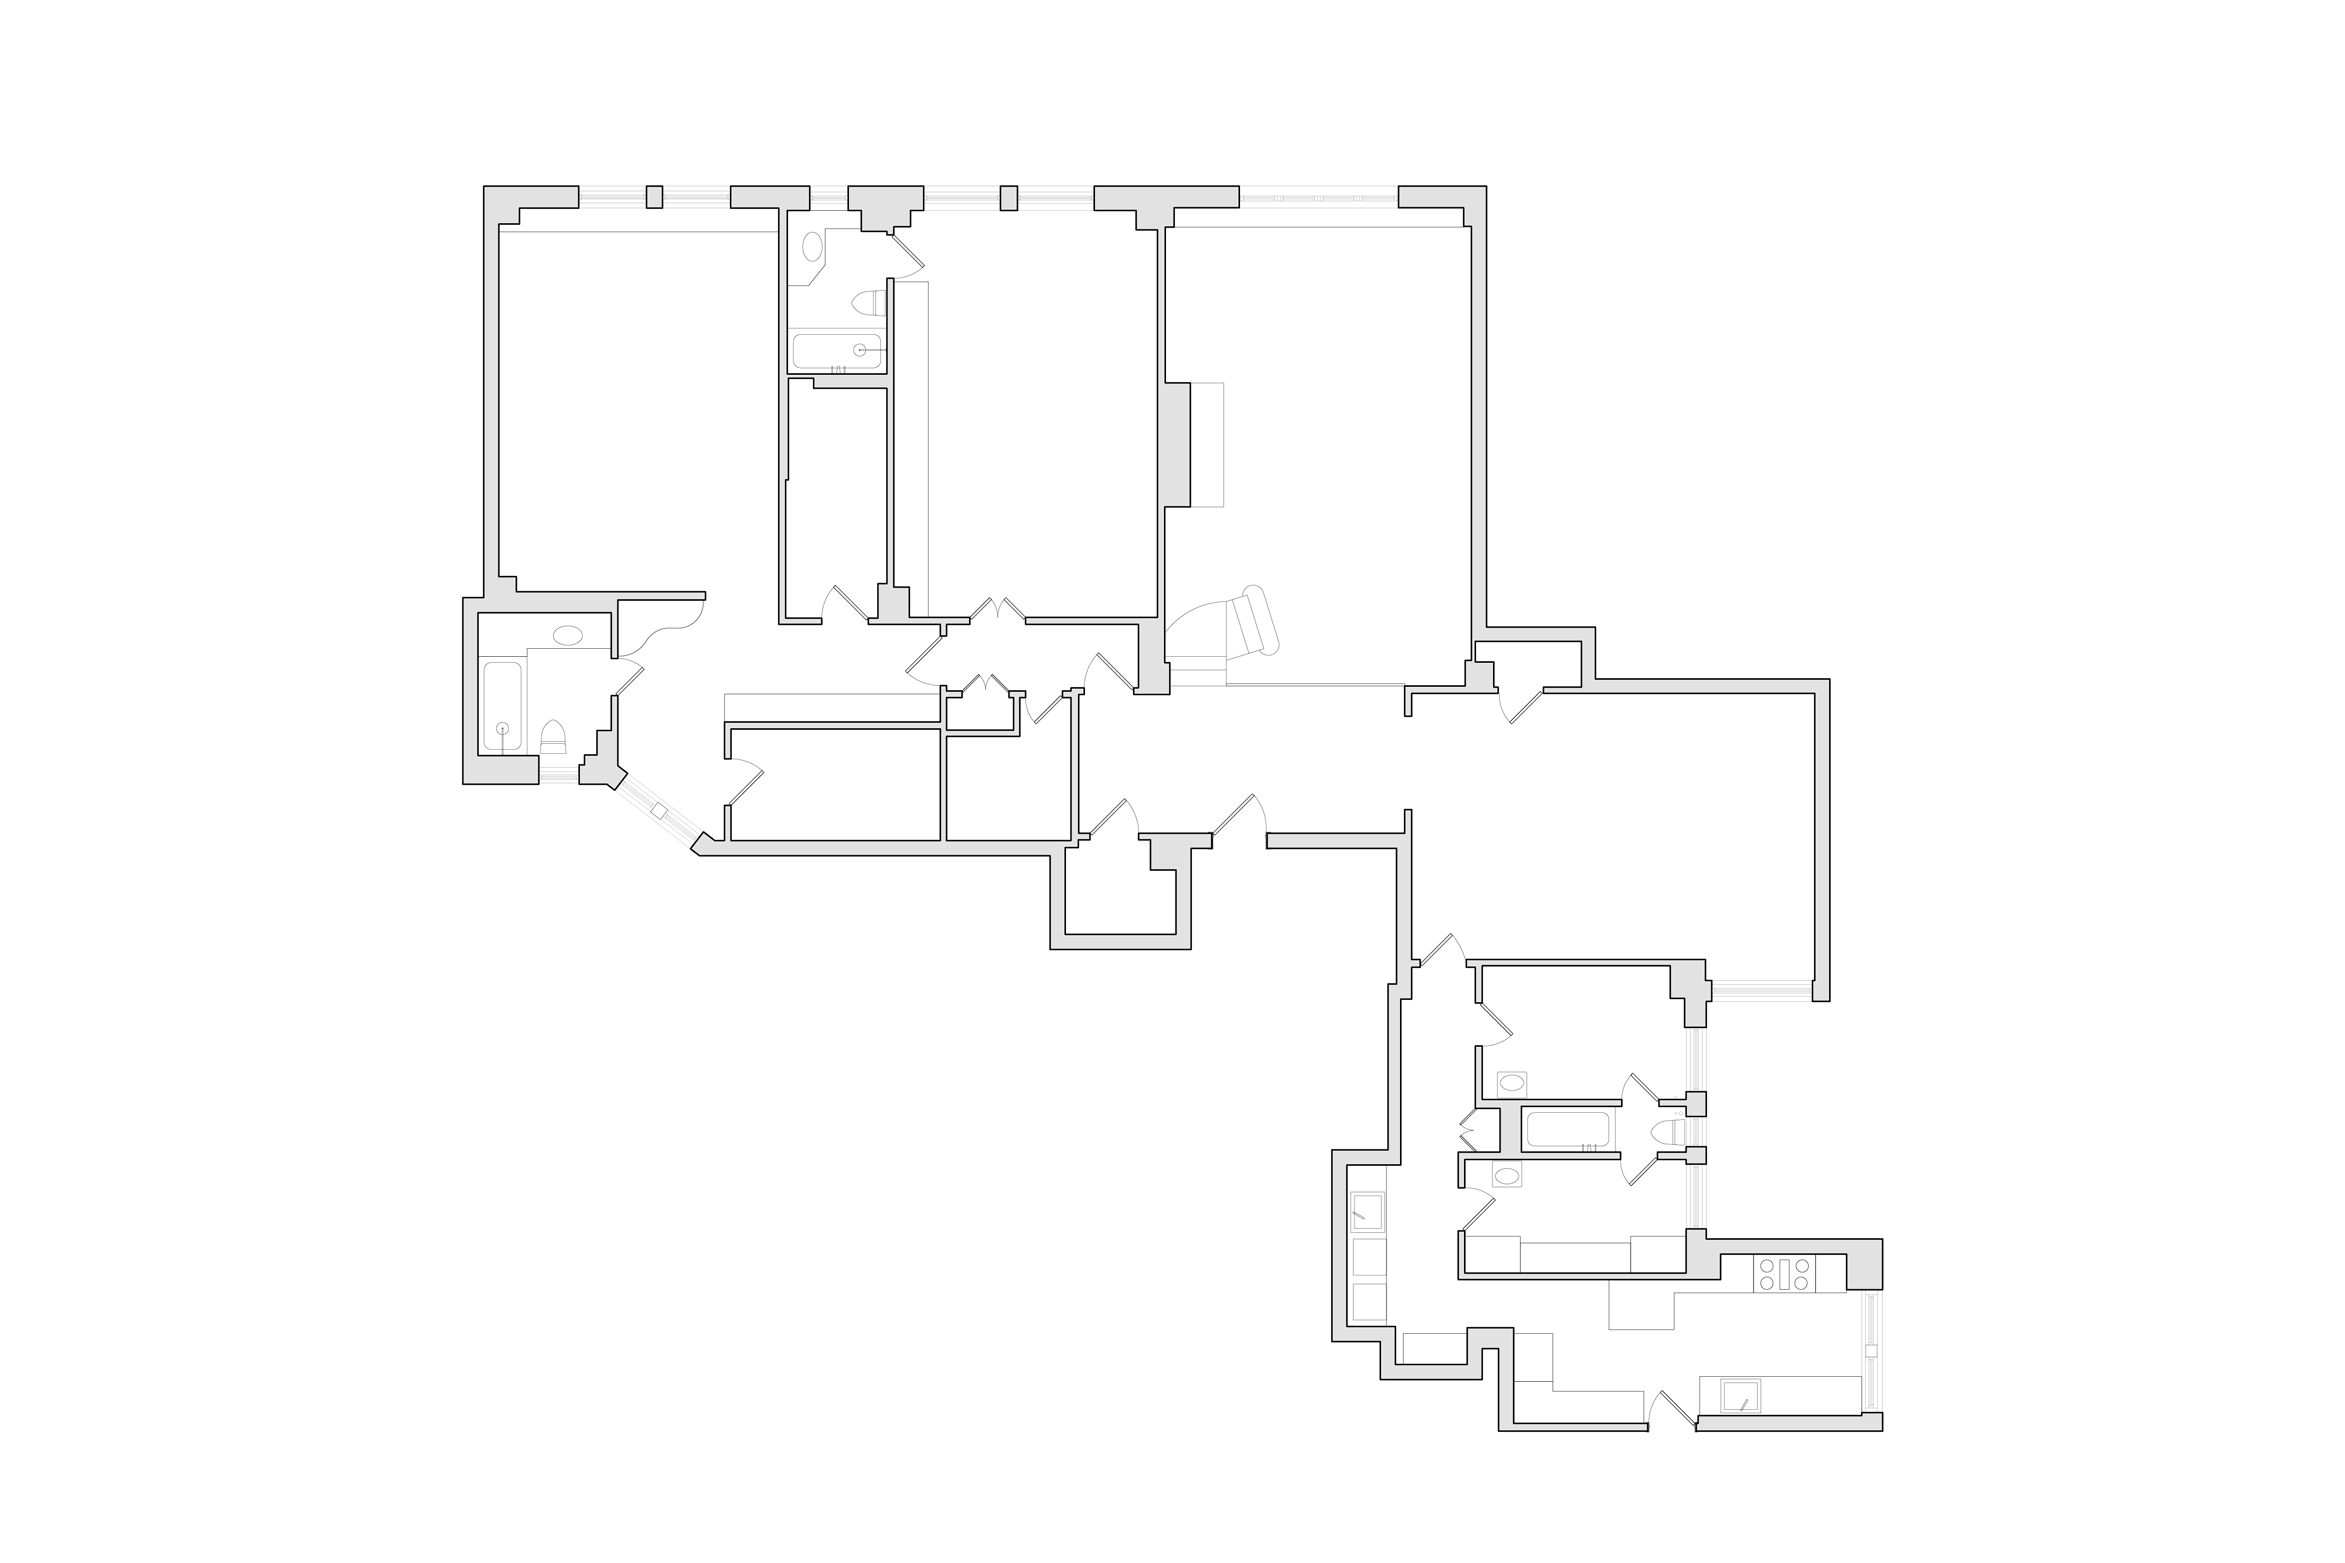 Atelier-Armbruster-East-75-Street-Apartment-Plan-Diagram-Animation.gif